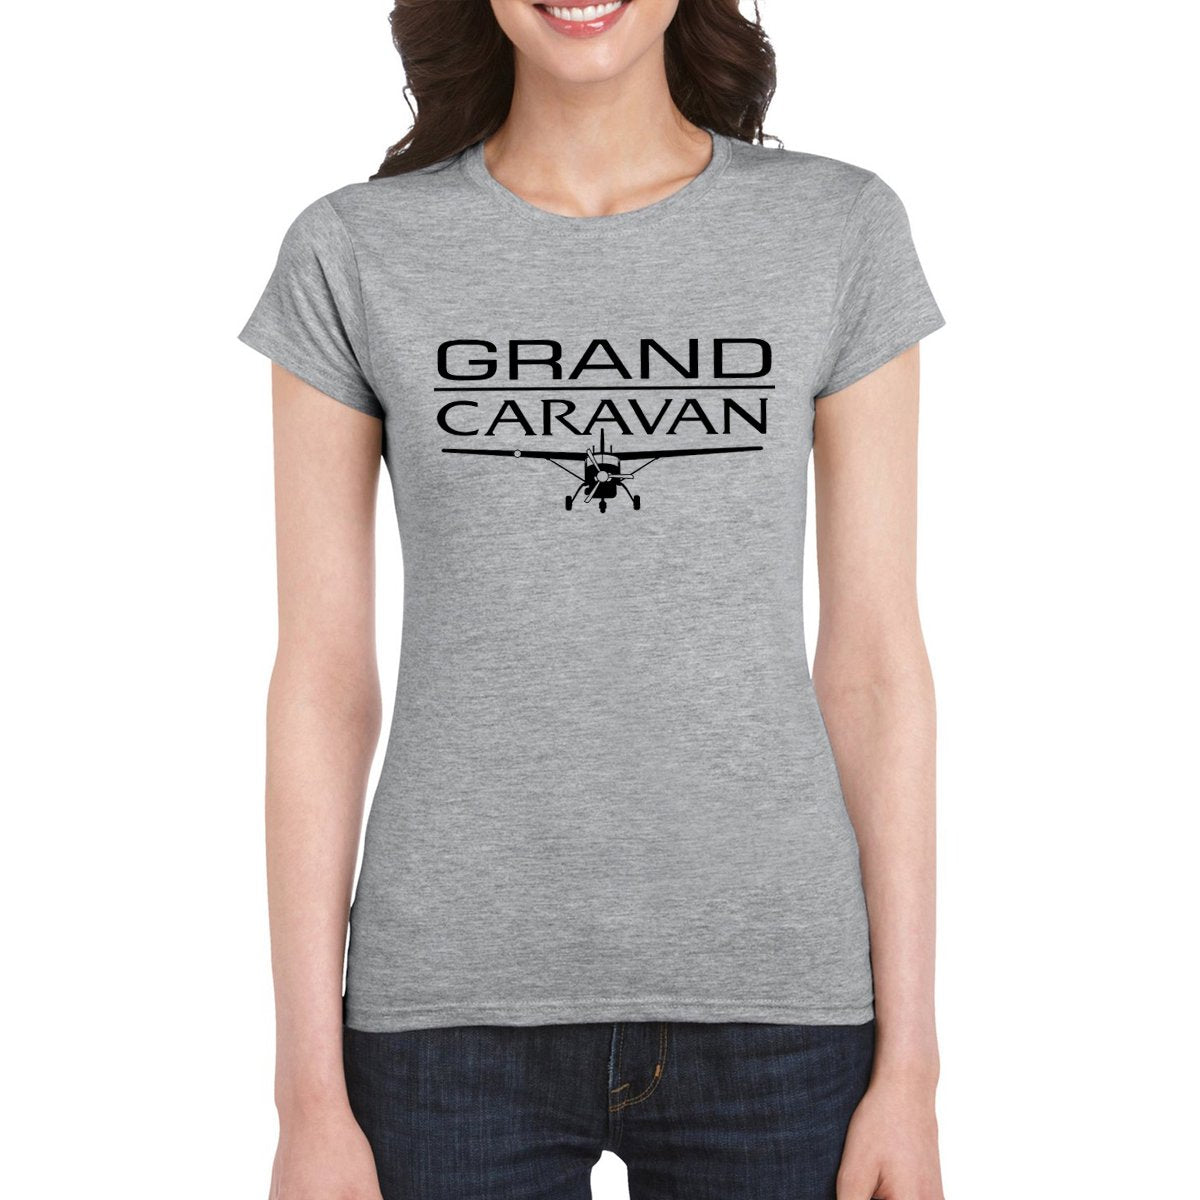 GRAND CARAVAN Women's T-Shirt